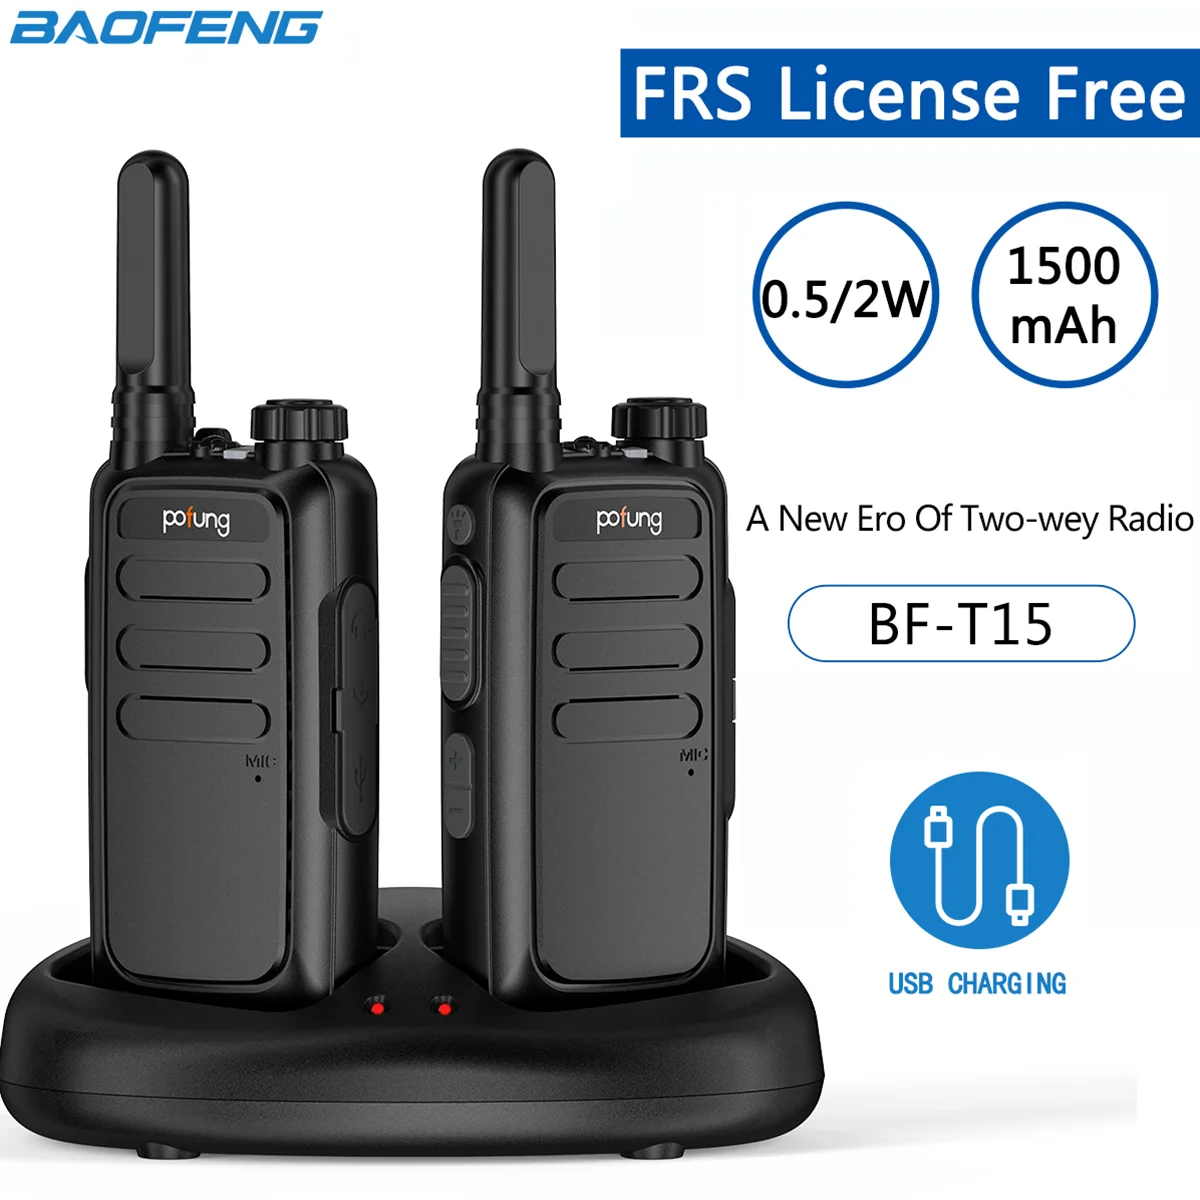 

BAOFENG T15 Mini Walkie Talkie FRS License-freei Two Way Radio VOX USB Charging Portable 22CH 2W/0.5W Wireless Set Communicator